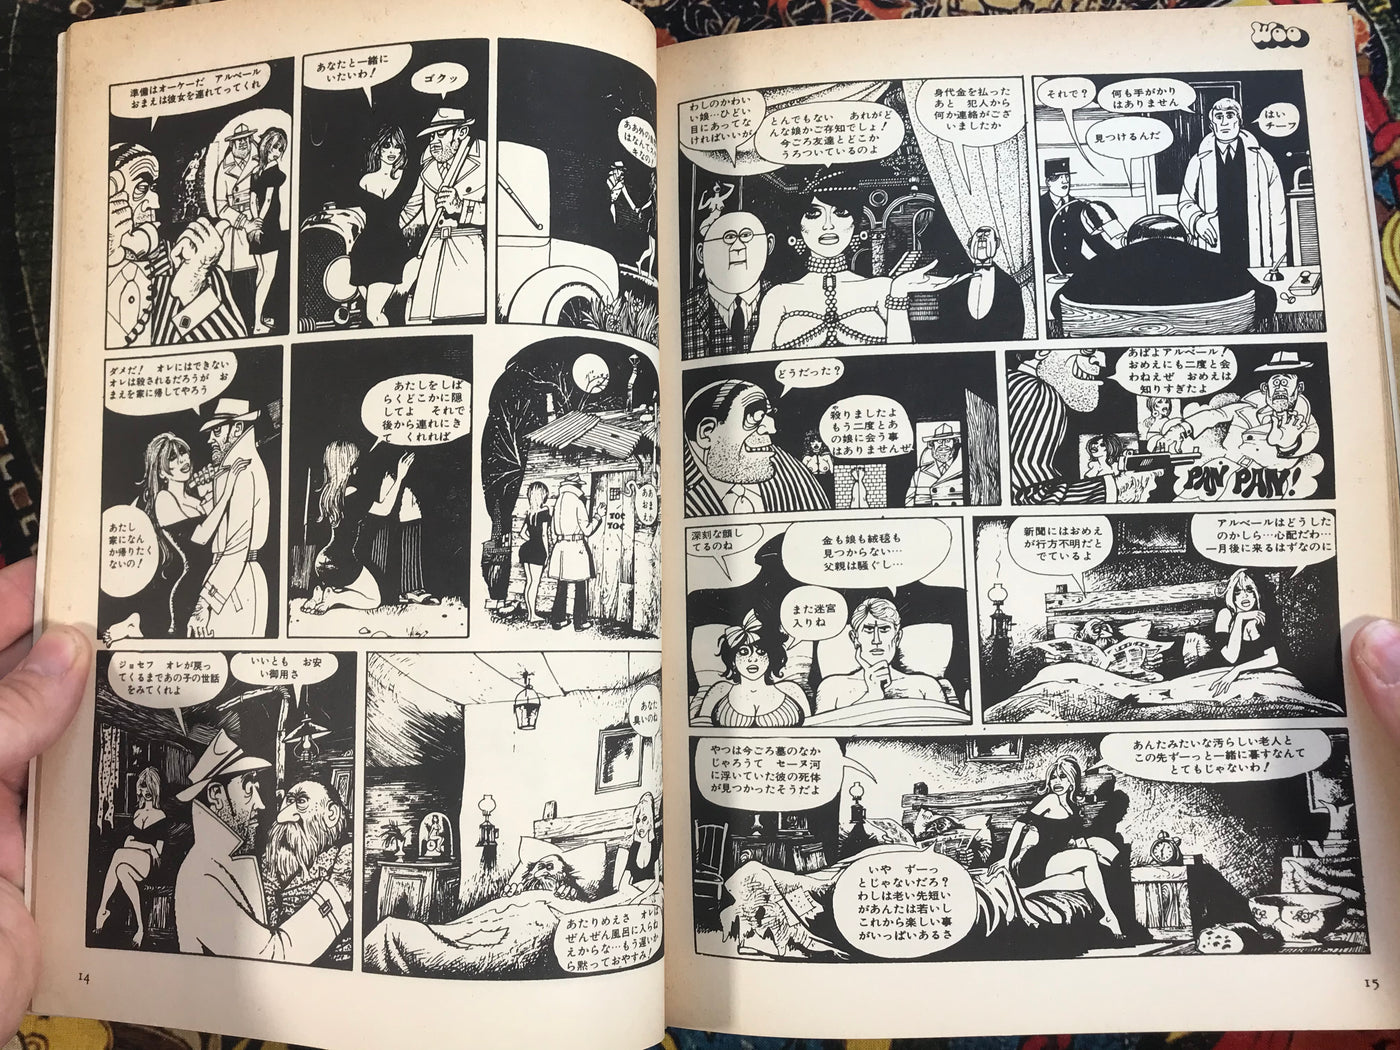 Woo No.4 (February 1973) International Comics in JP